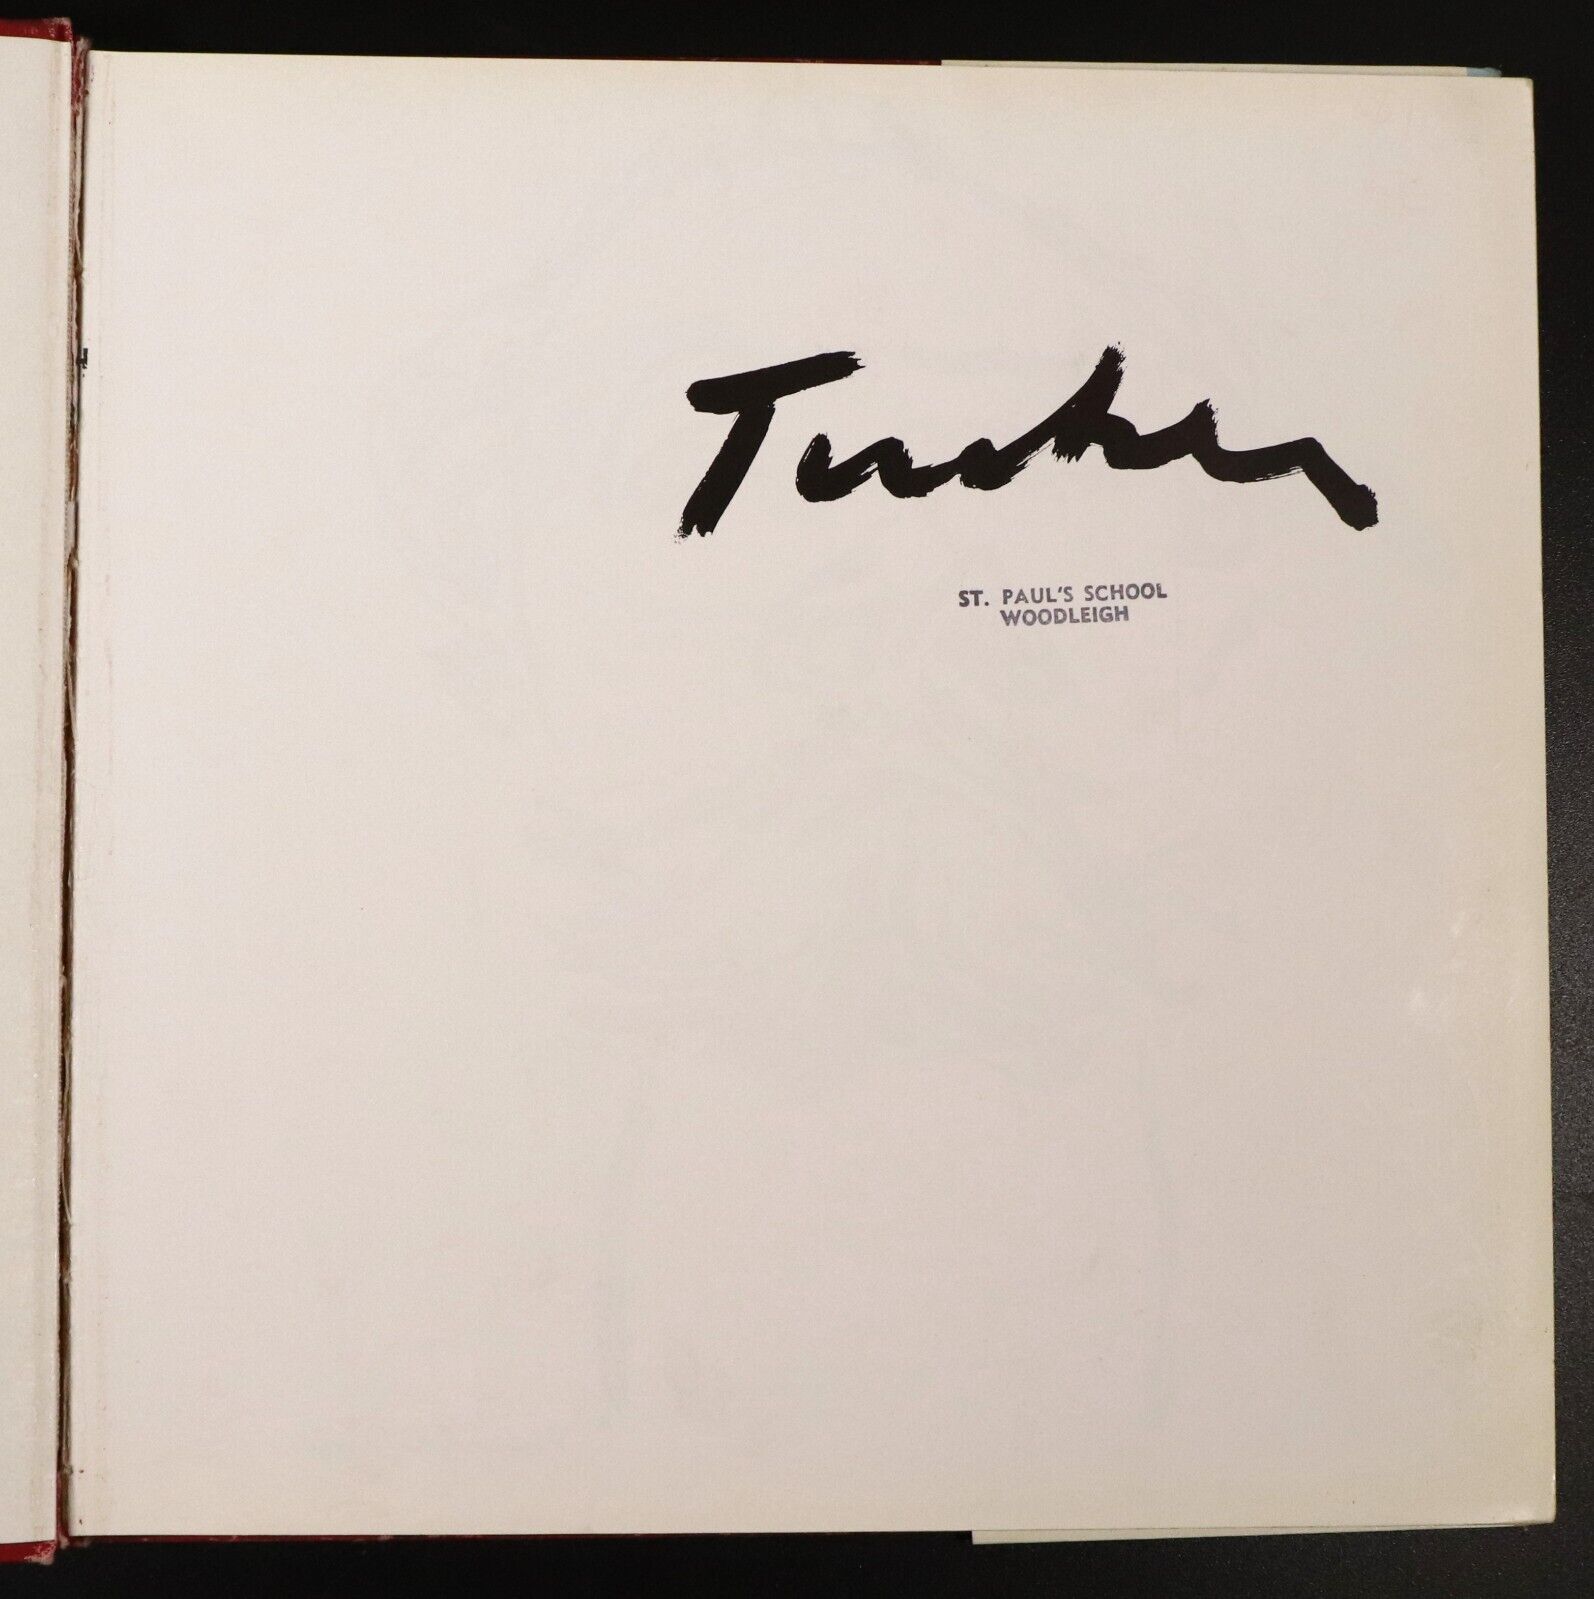 1982 Albert Tucker by J. Mollison & N. Bonham Australian Art Reference Book